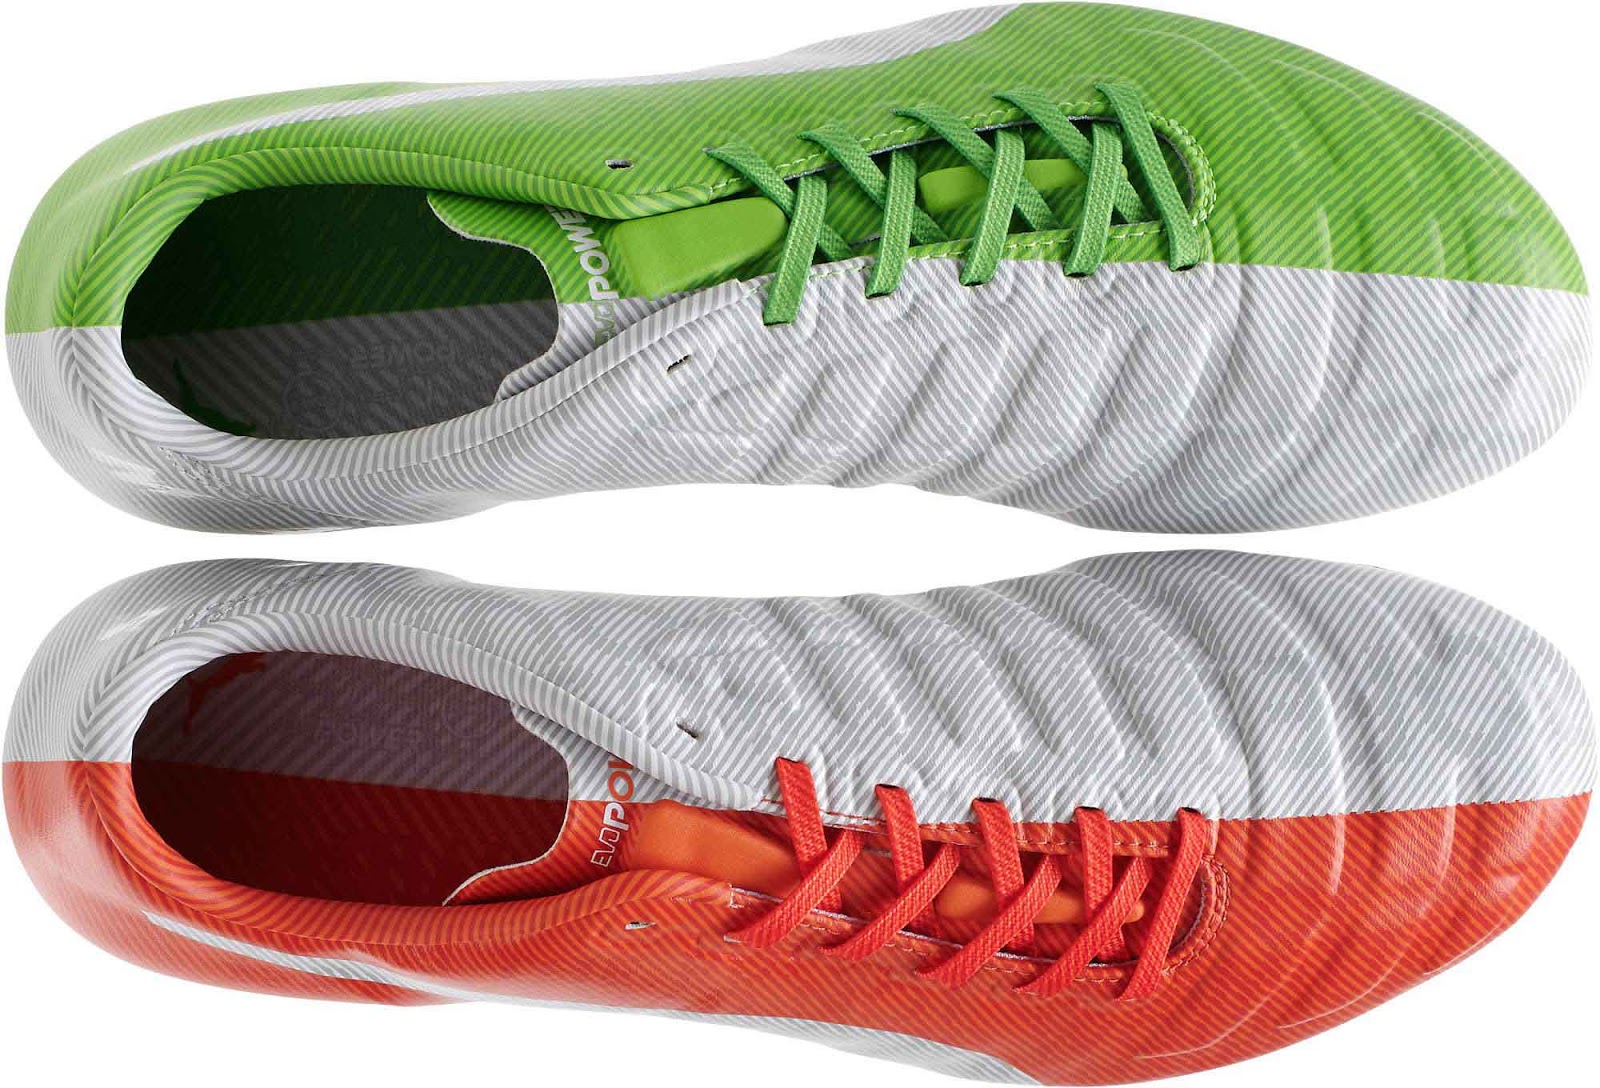 New-Puma-Mario-Balotelli-evoPOWER-Boots-1